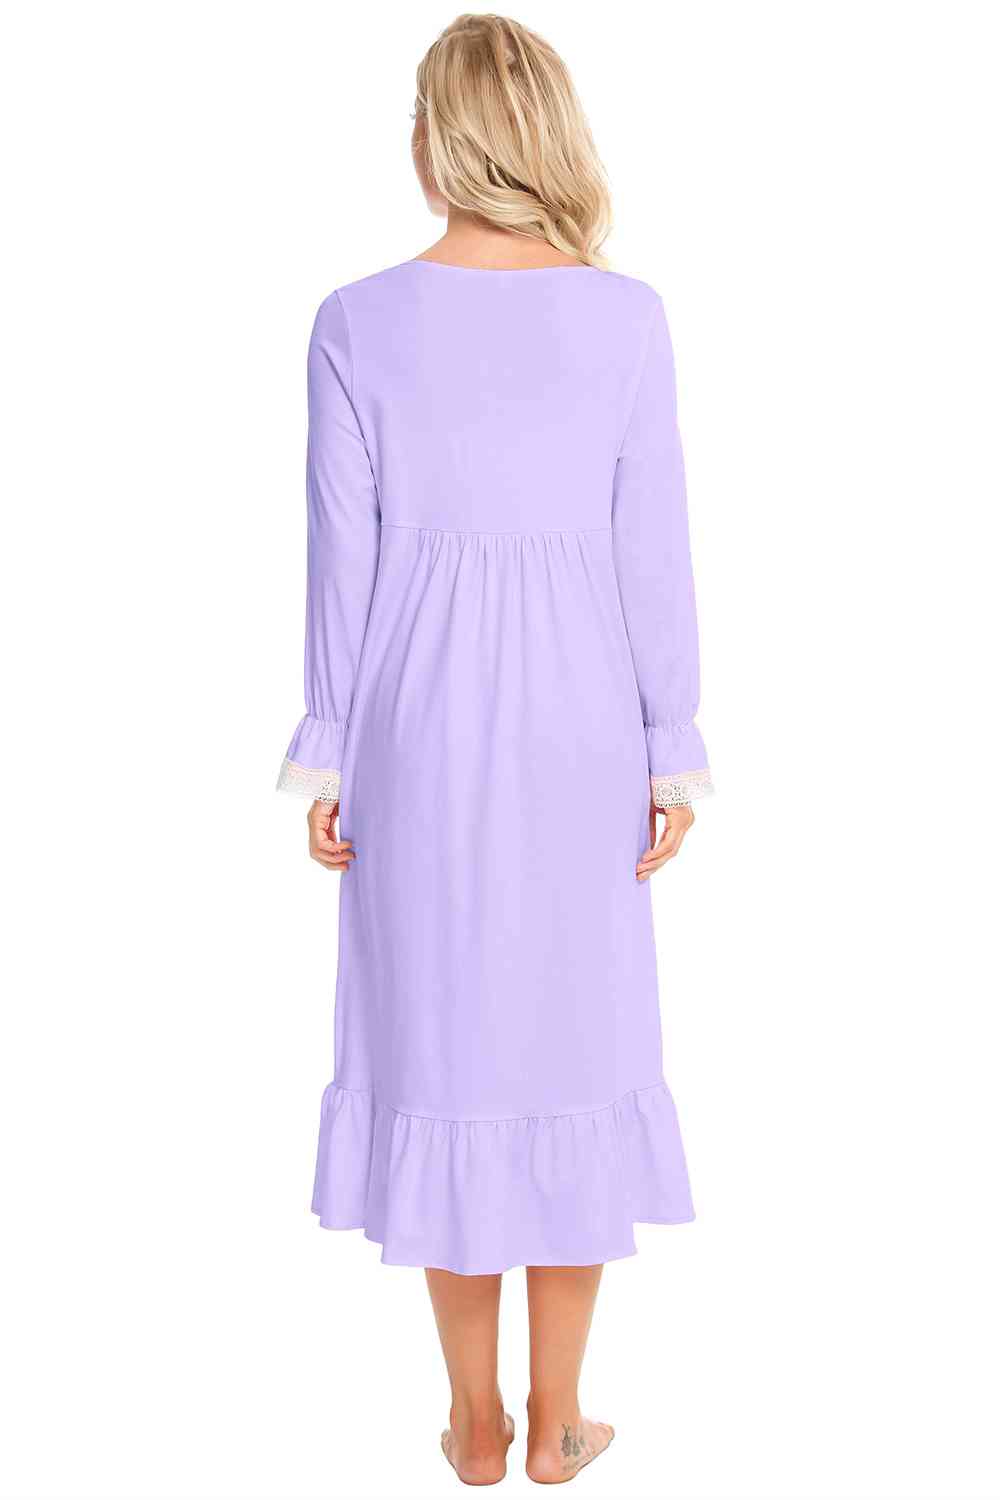 Lace Detail Square Neck Flounce Sleeve Night Dress - Opulence & Essence